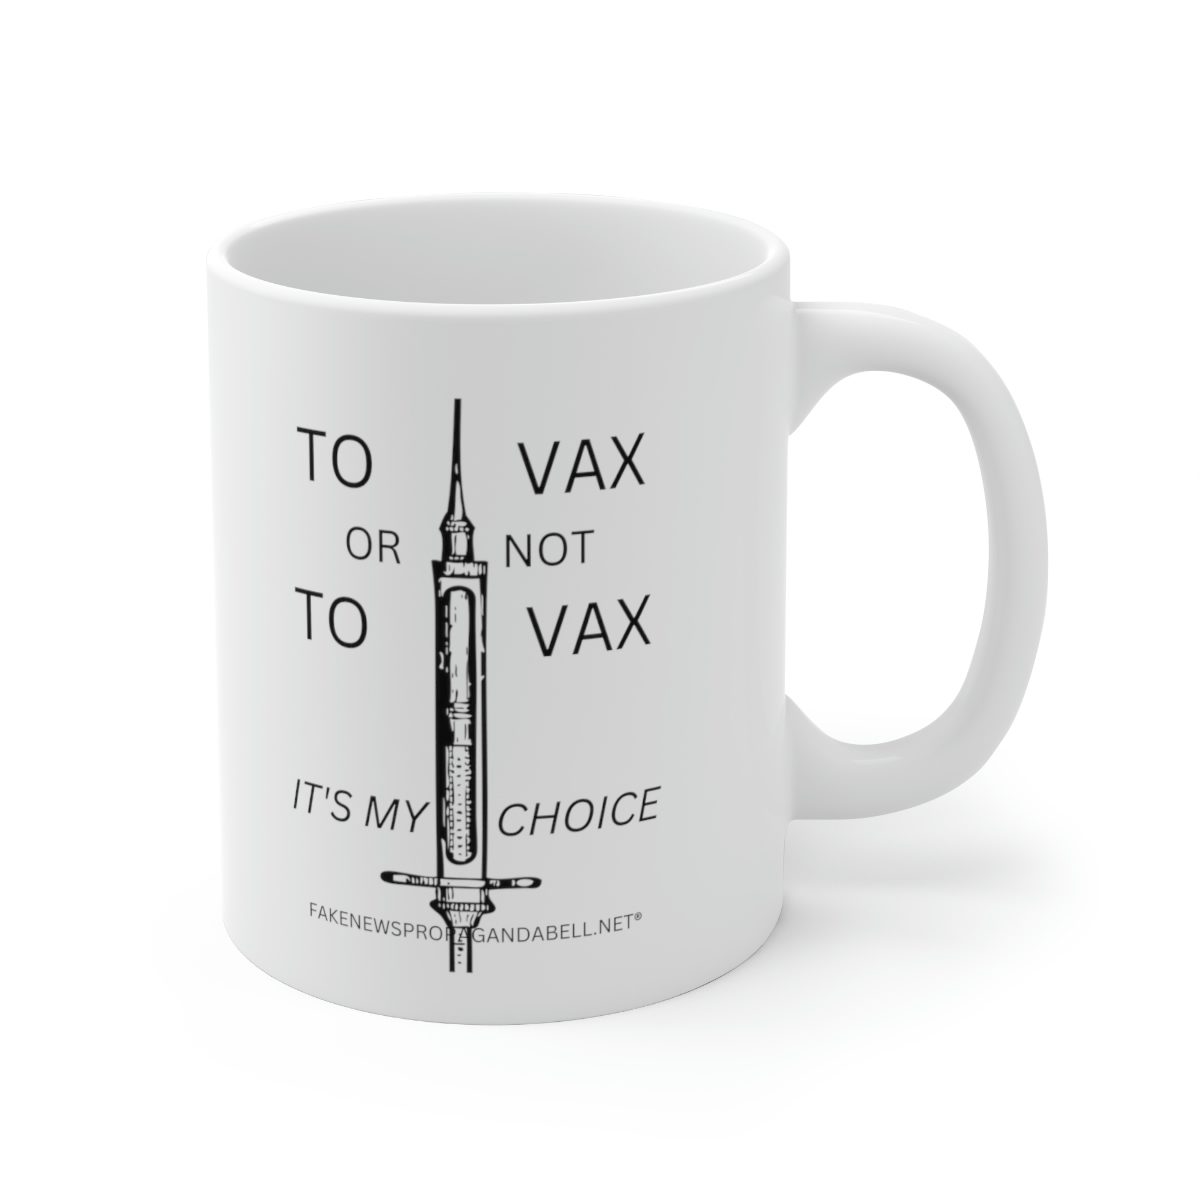 TO VAX OR NOT TO VAX – IT’S MY CHOICE   Ceramic Mug 11oz